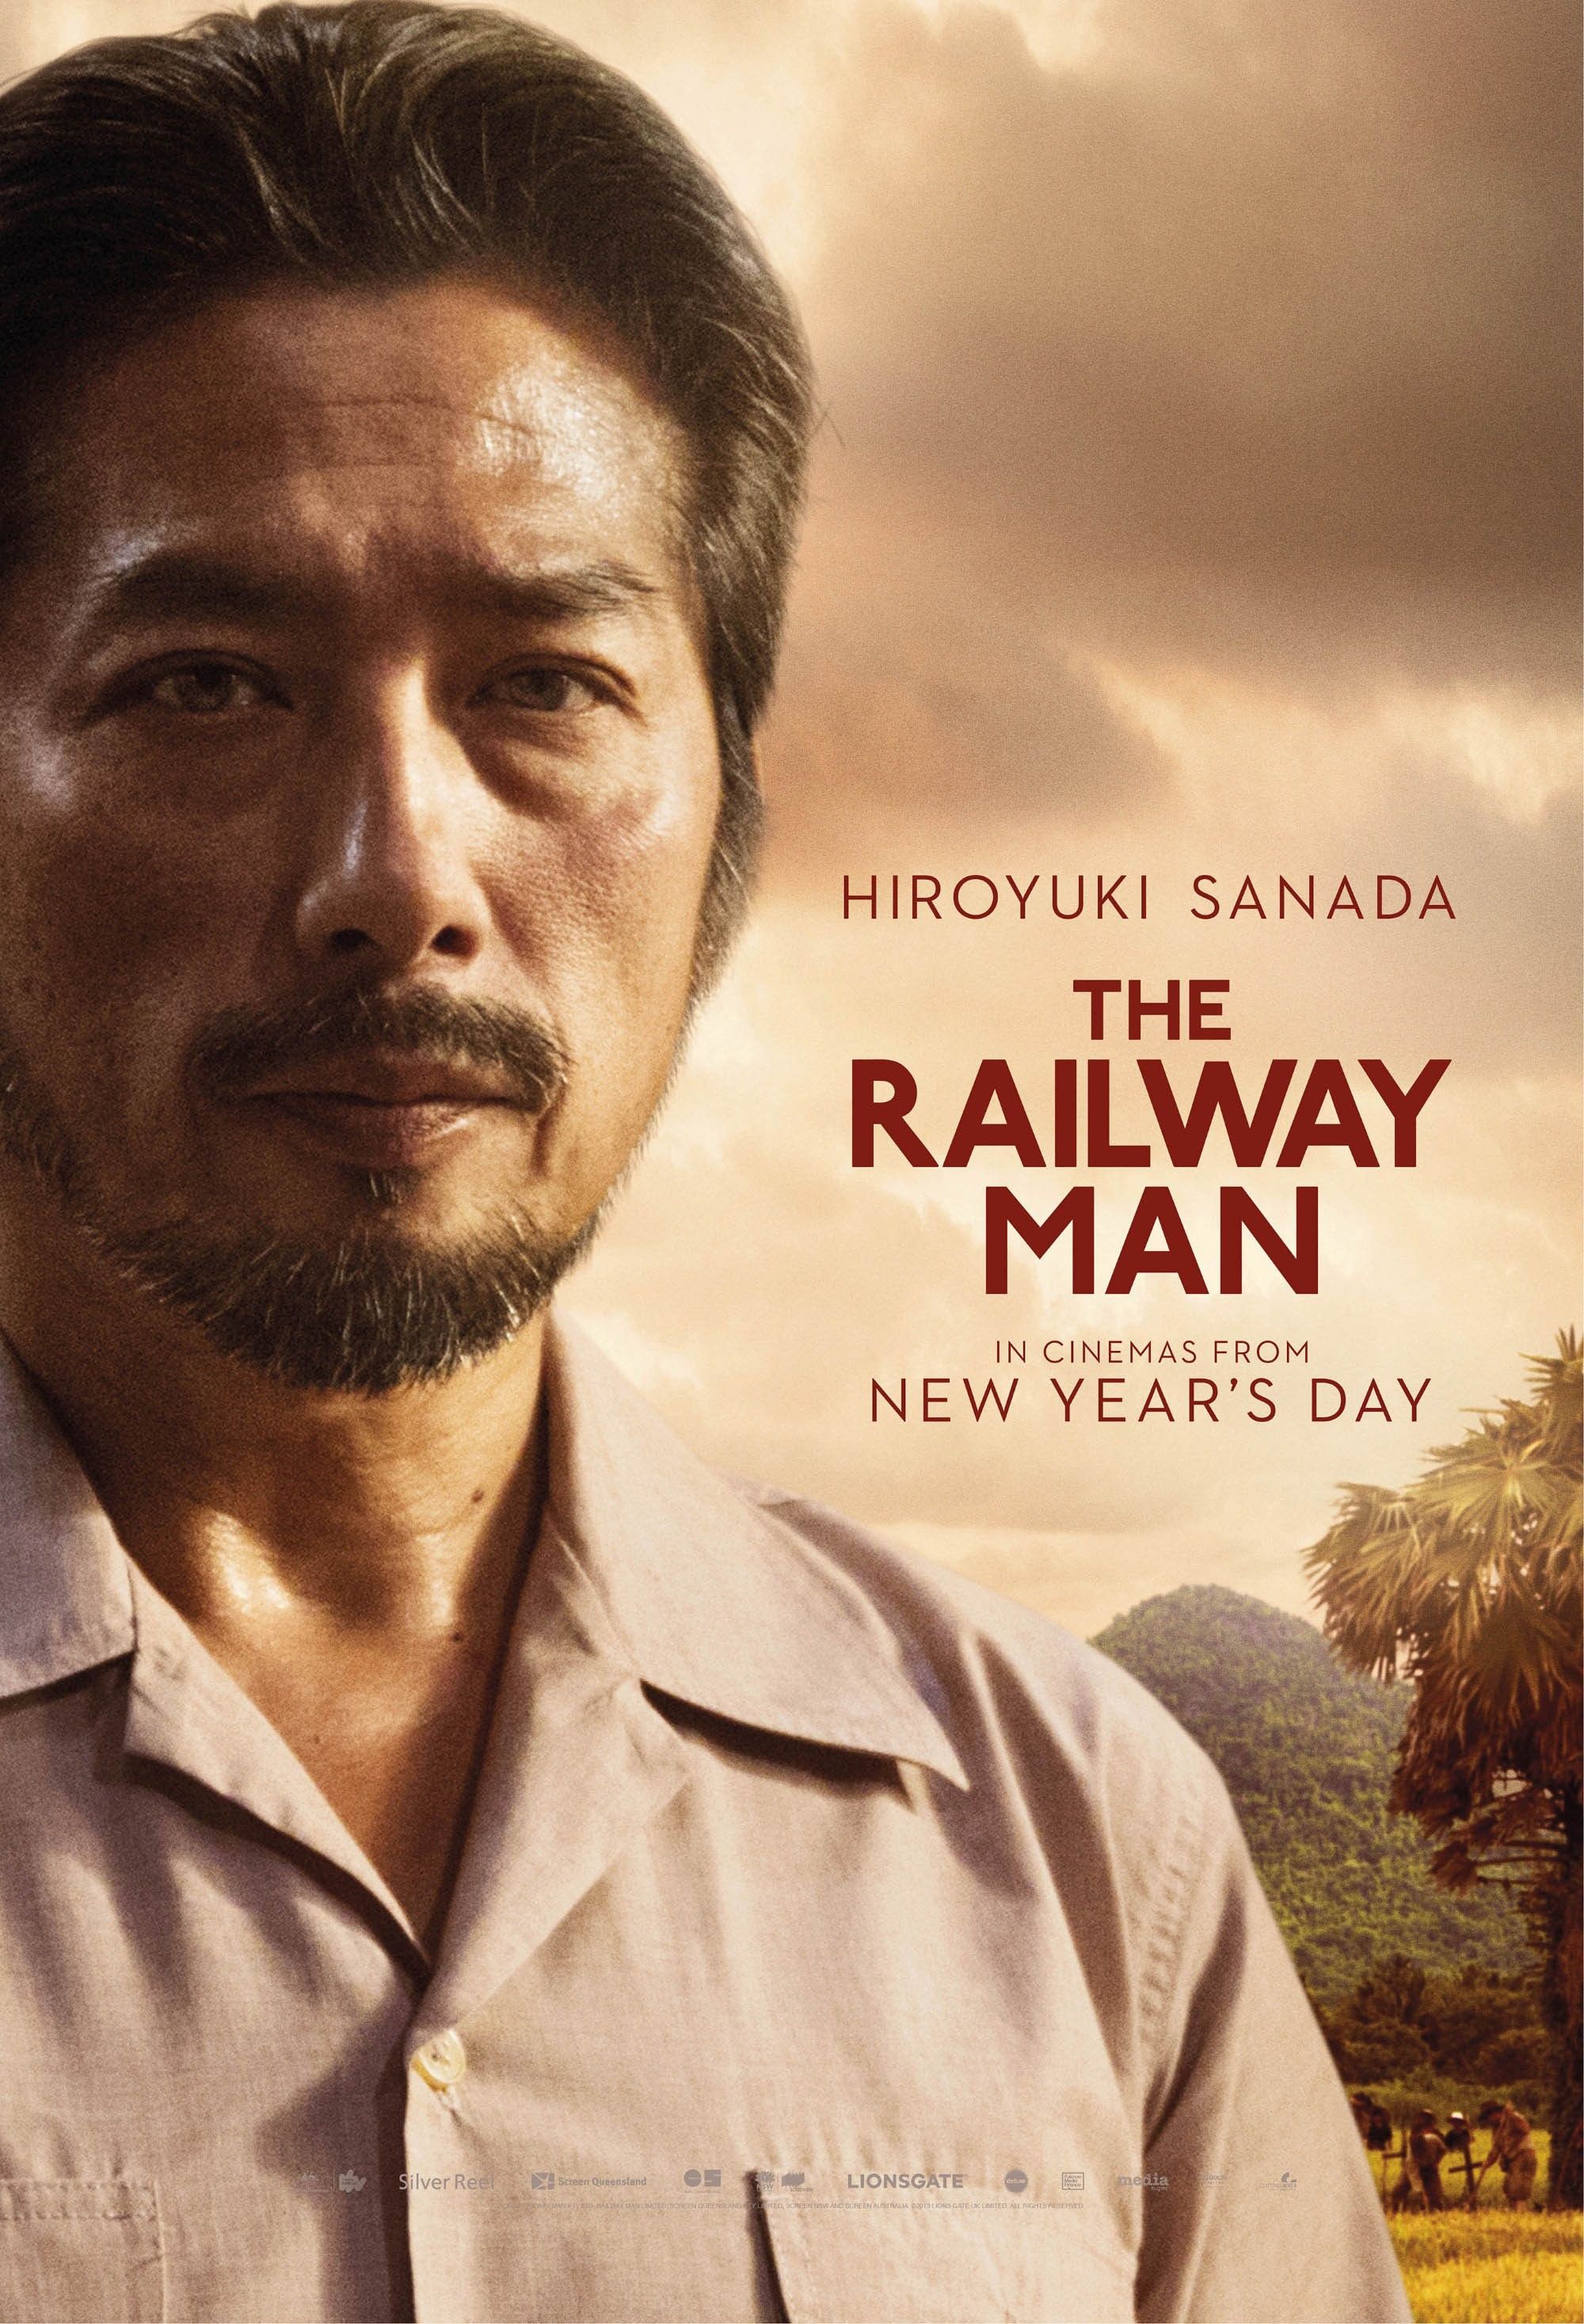 The Railway Man Hiroyuki Sanada Character Poster